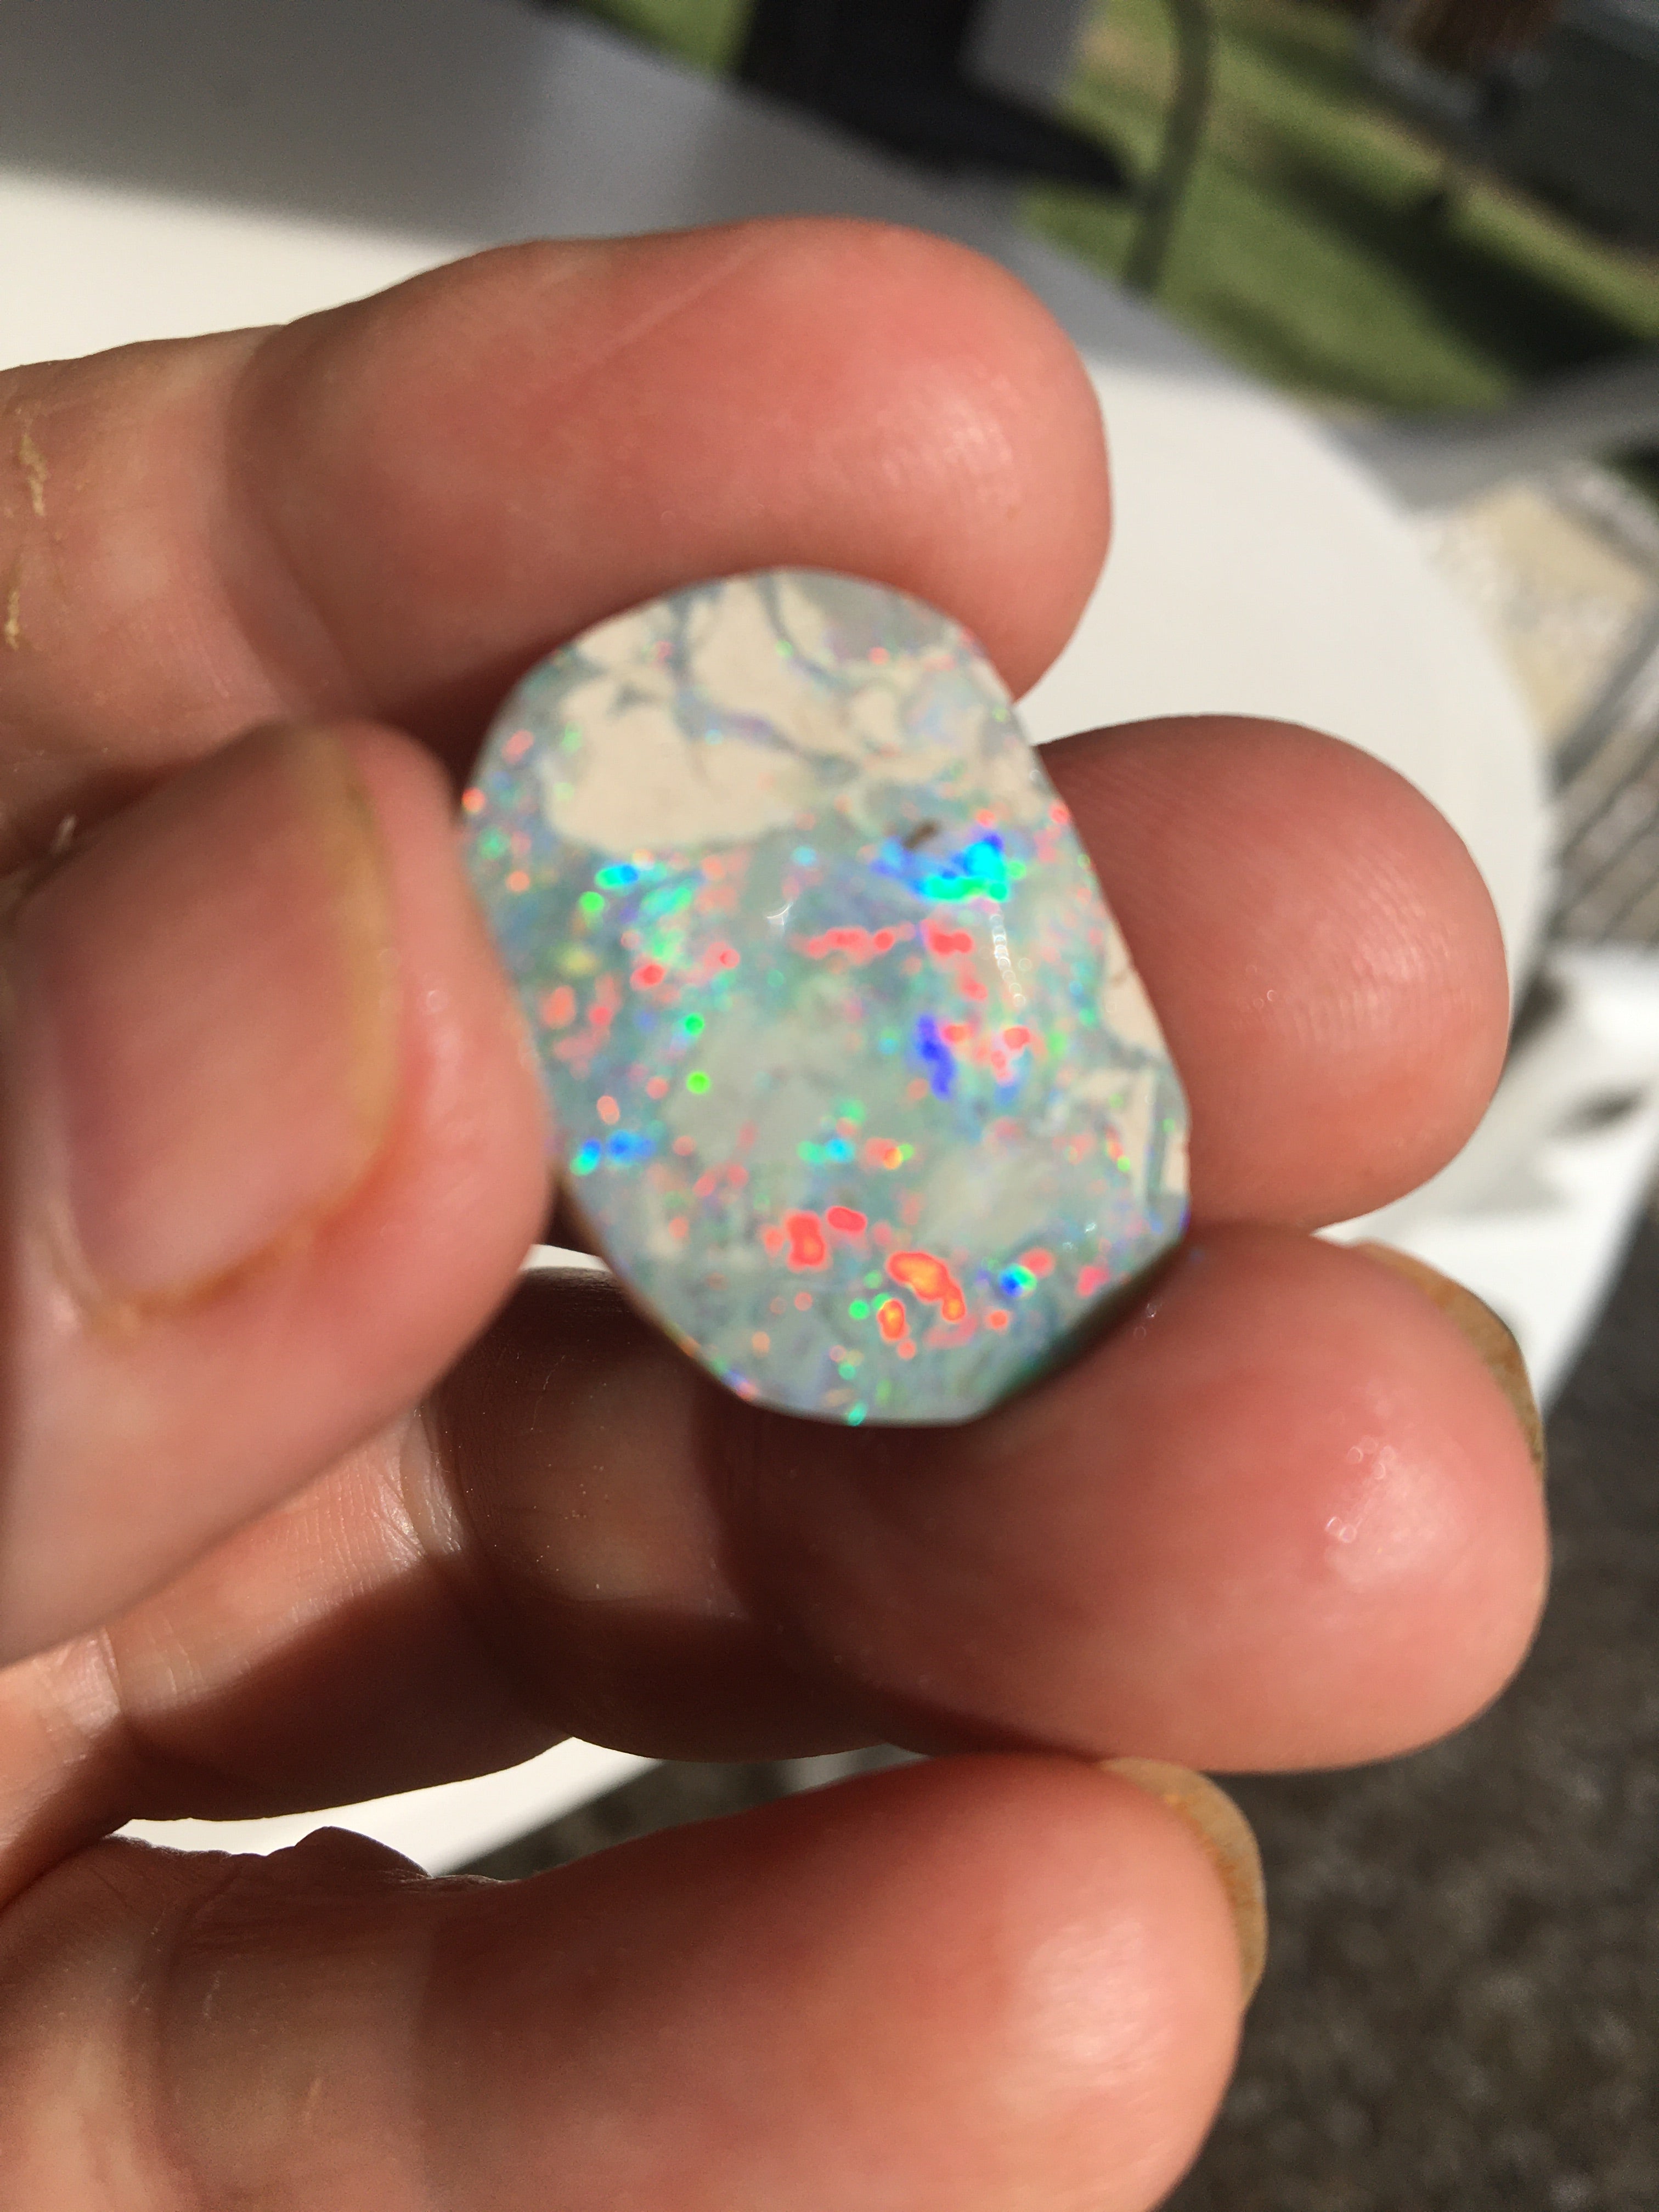 Rough seam Opal  from Lightning Ridge